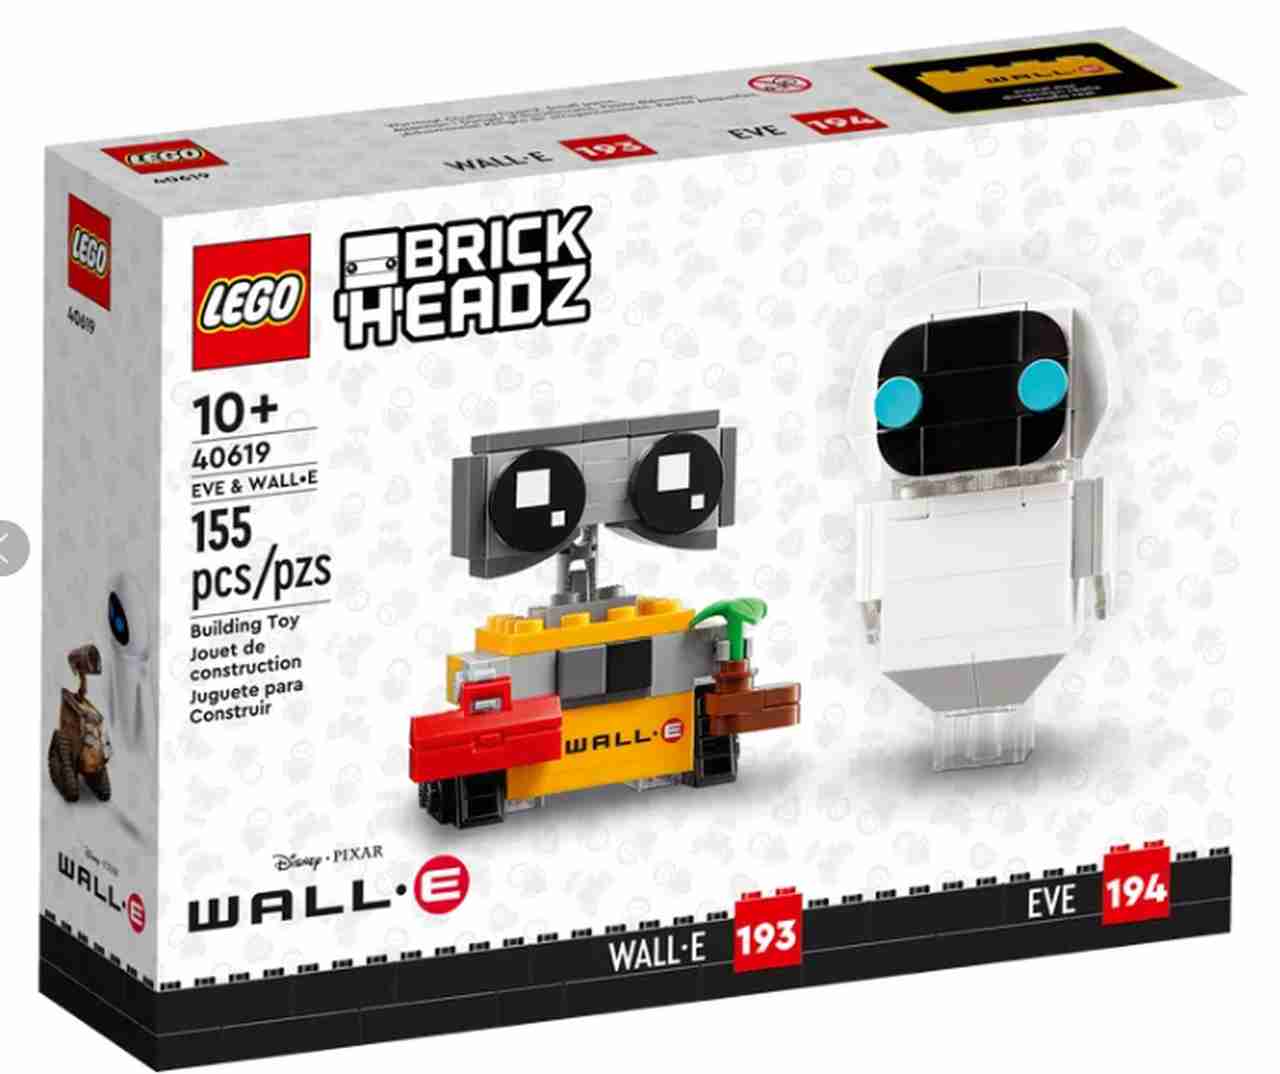 Noch mehr Lego Disney Brickheadz 